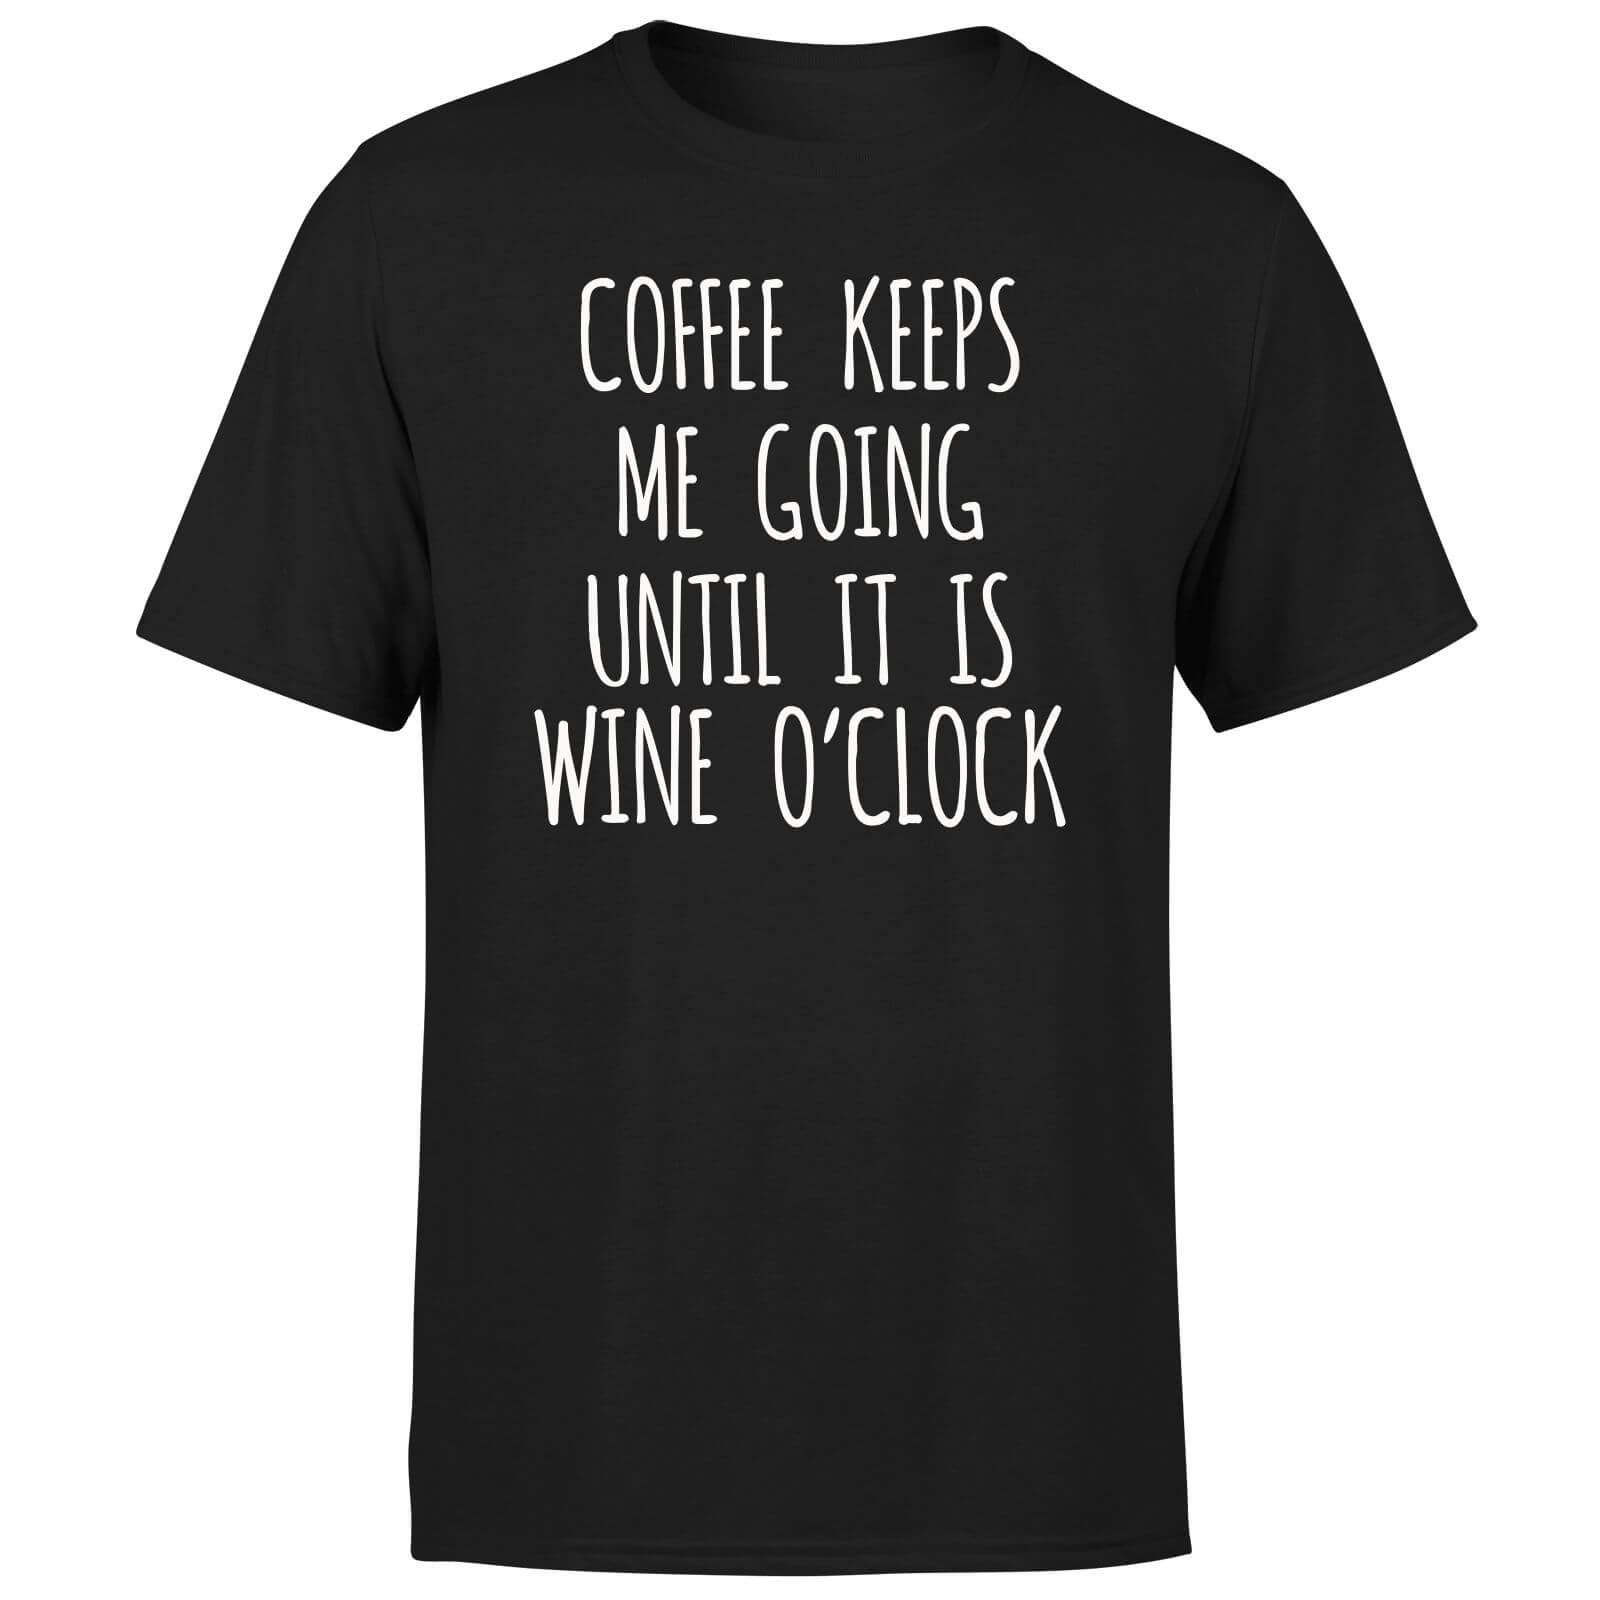 Coffee Keeps me Going T-Shirt - Black - S - Black